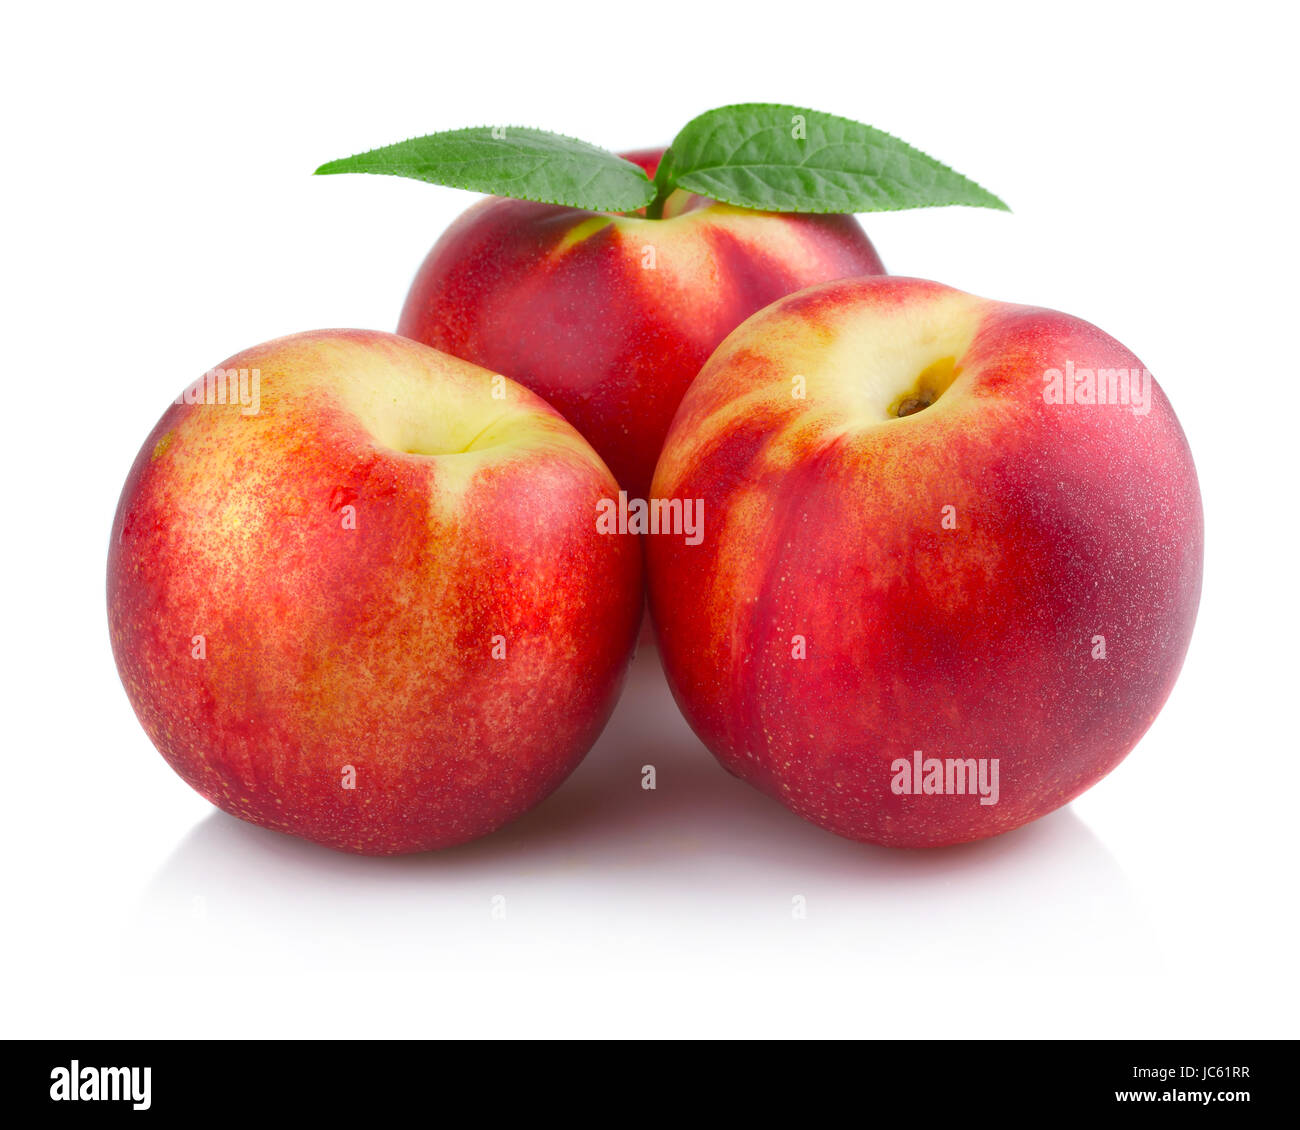 Three ripe peach (nectarine) fruits isolated on white background Stock Photo